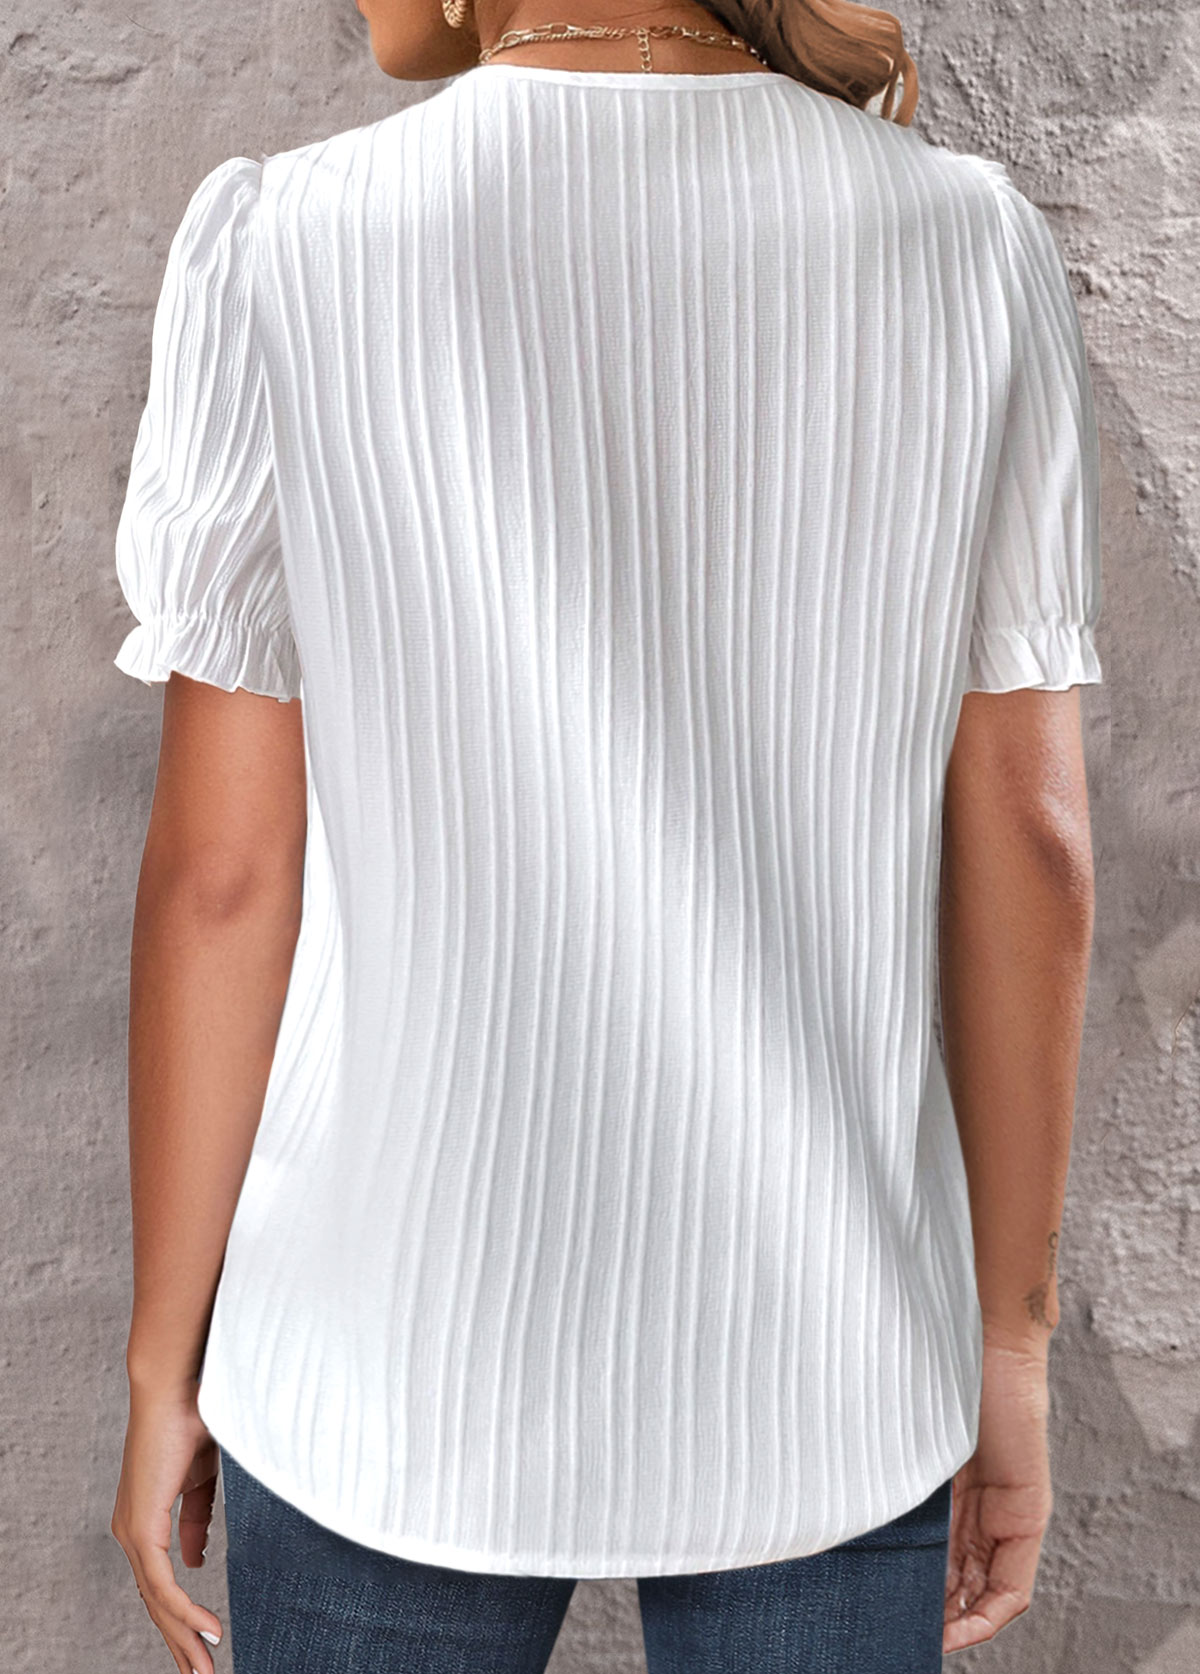 Plus Size White Lace Short Sleeve T Shirt